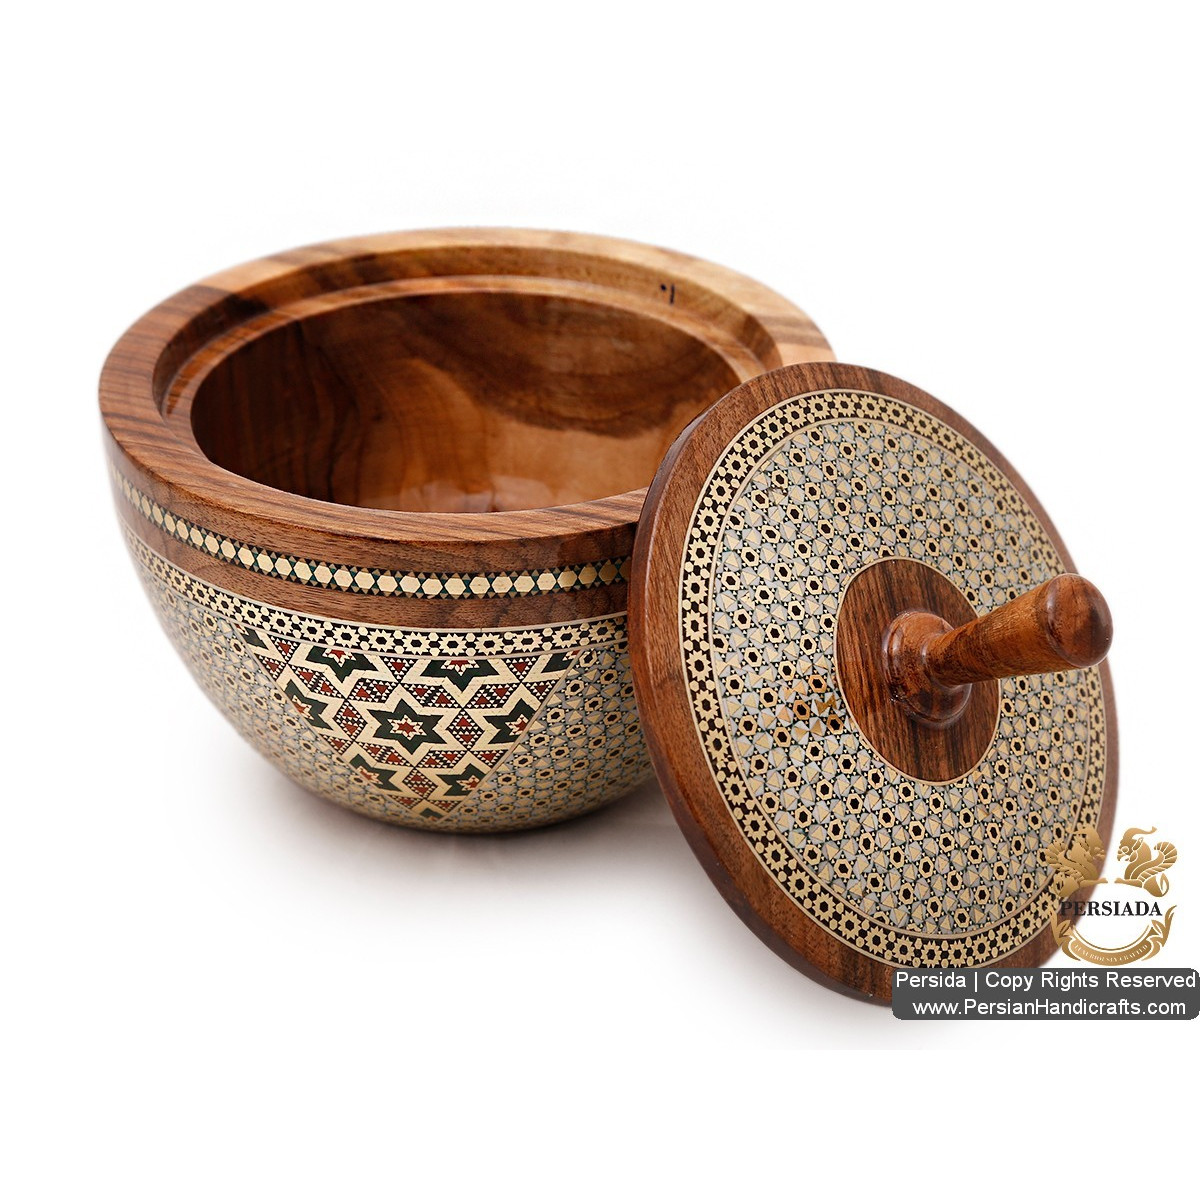 Classy Look Luxurious Bowl | Khatam Marquetry | HKH5202 | Persiada